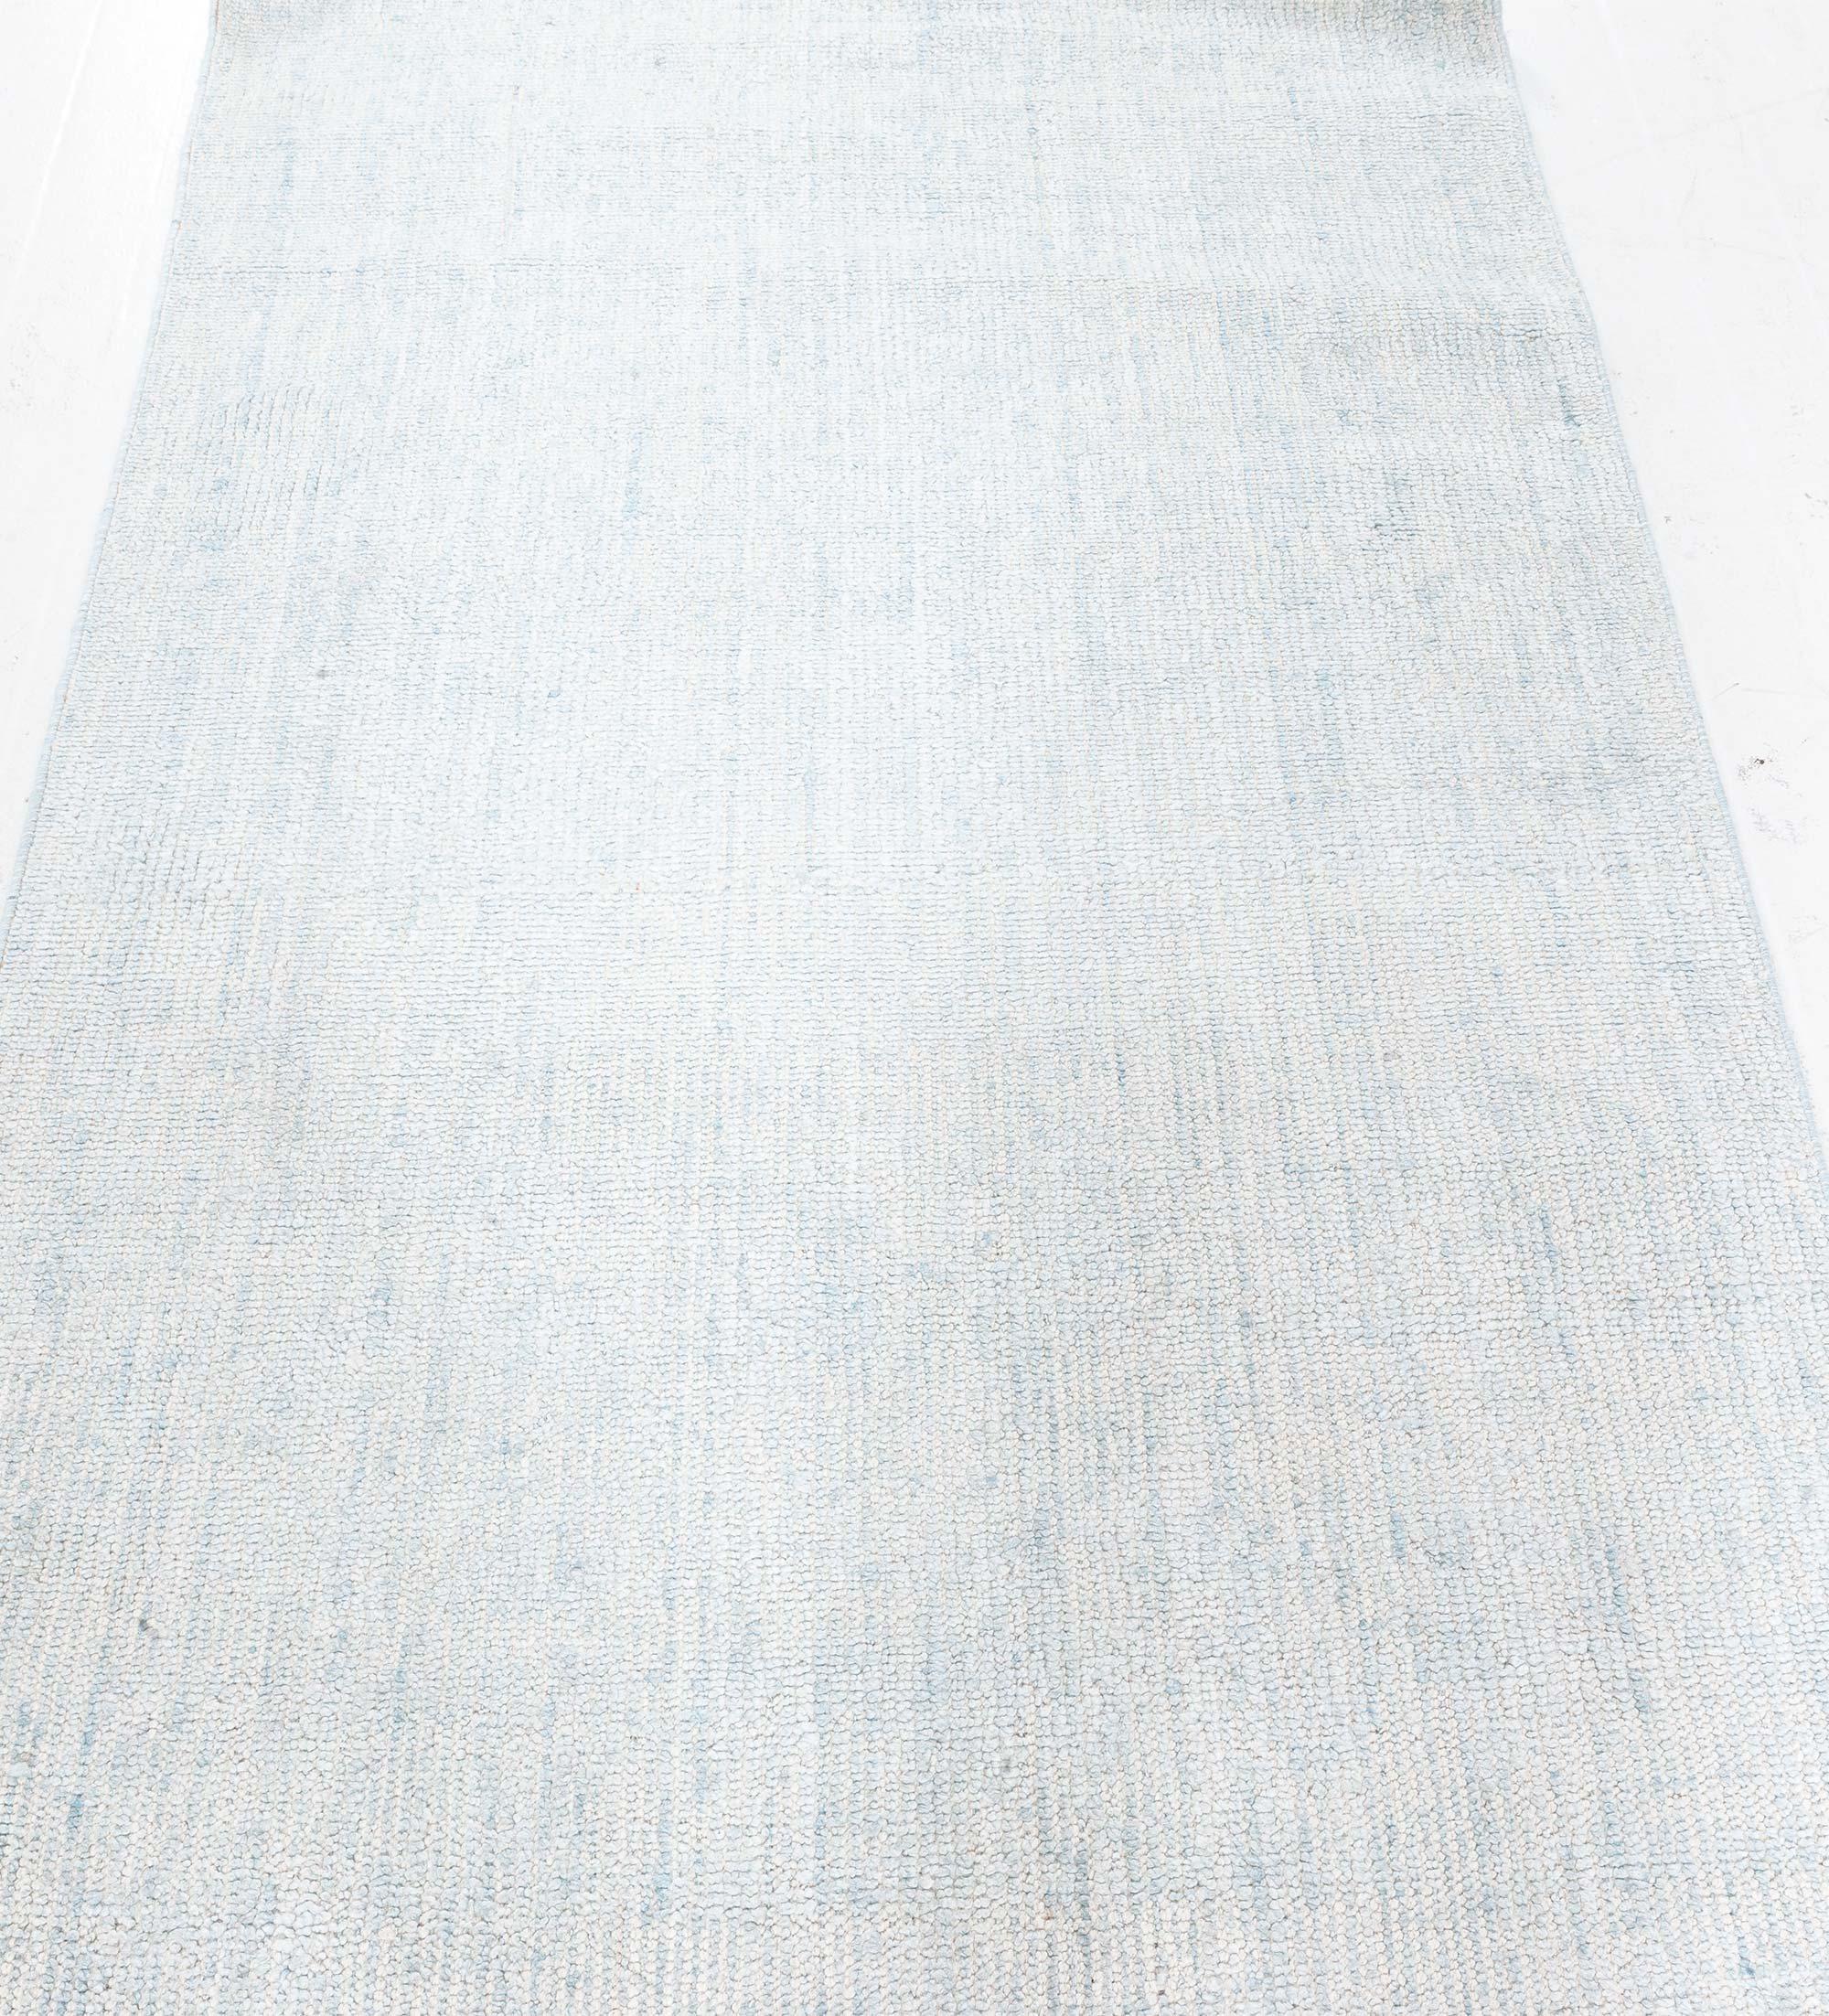 Modern Contemporary Aqua-blue Wool Rug by Doris Leslie Blau For Sale